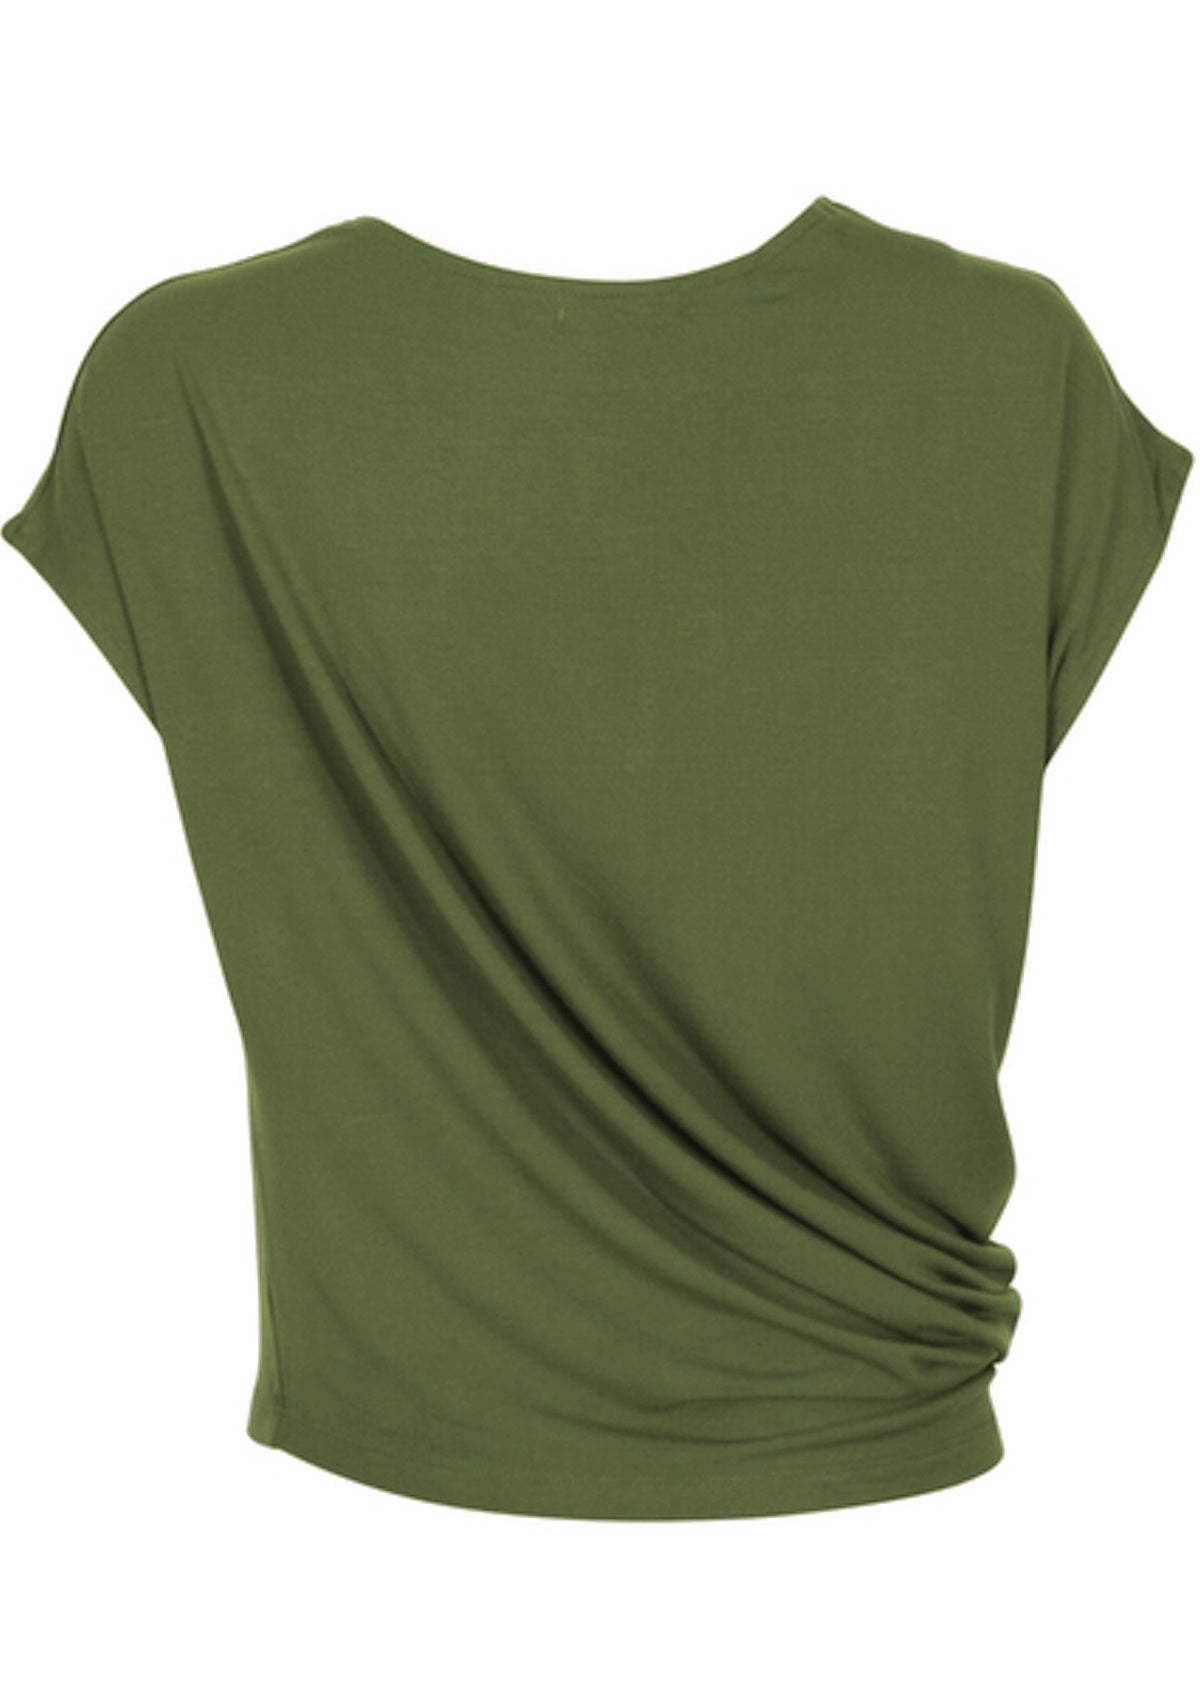 Woman wearing green rayon top with side drape